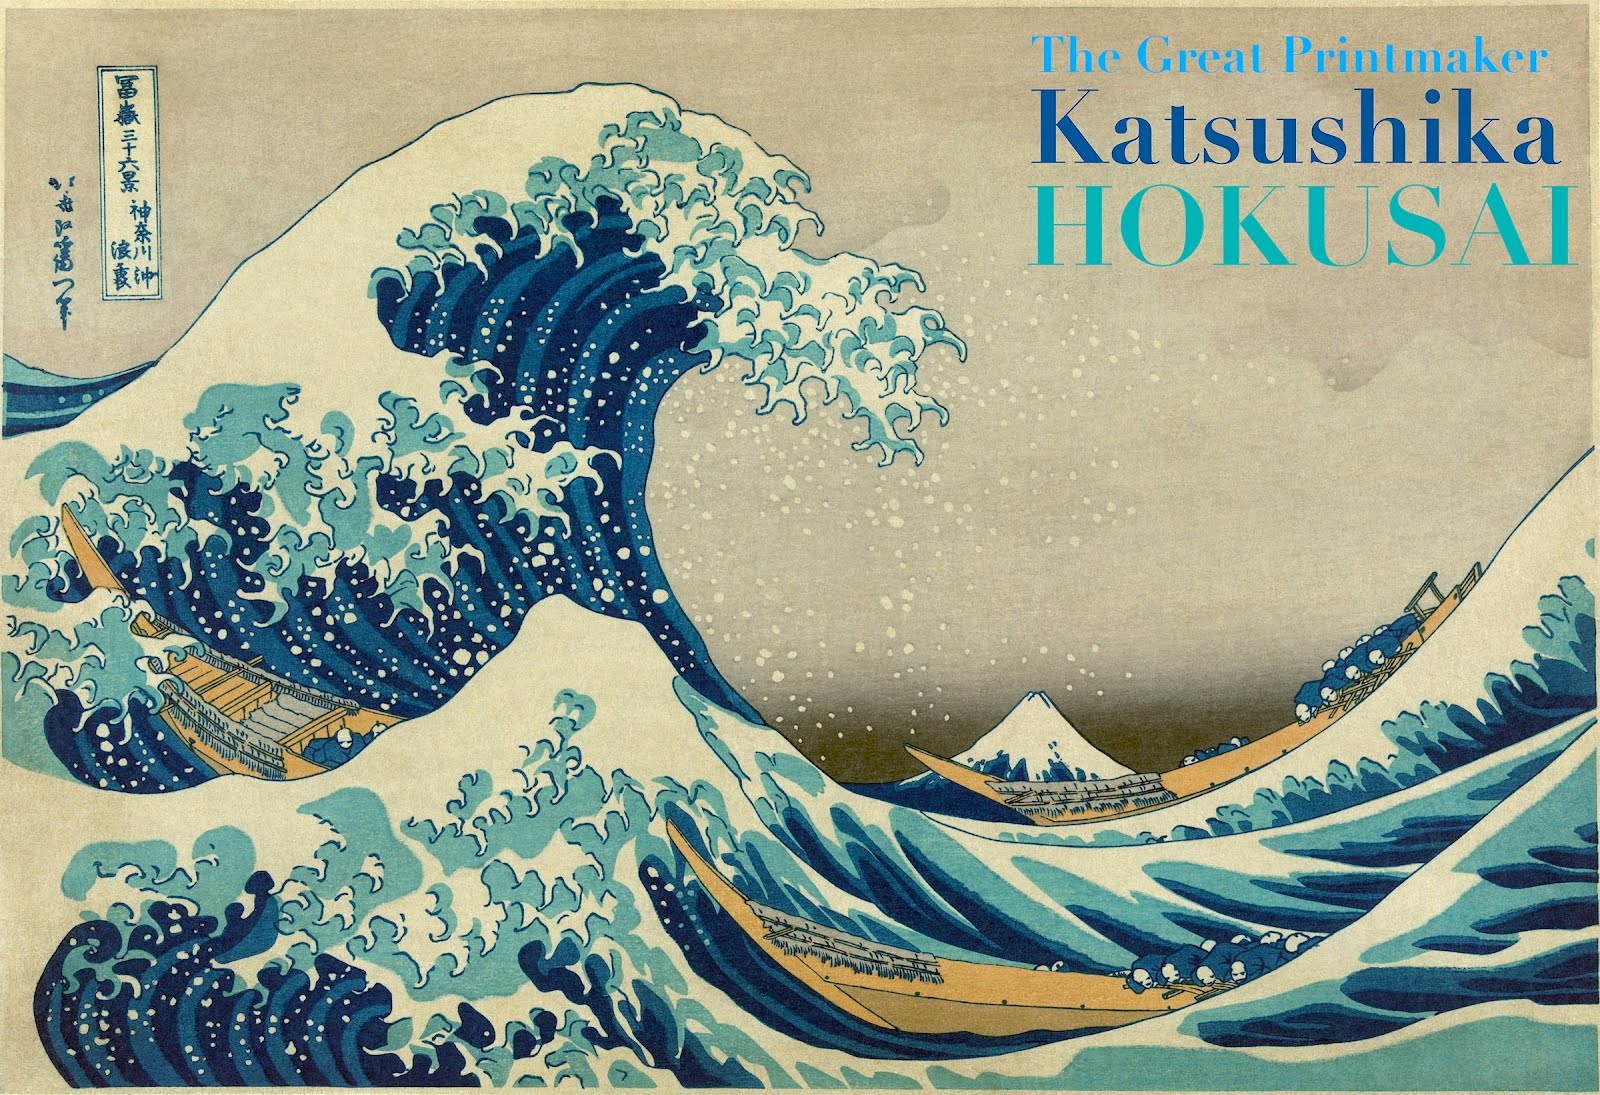 KATSUSHIKA HOKUSAI: Legendary Print Maker + Japanese Painter